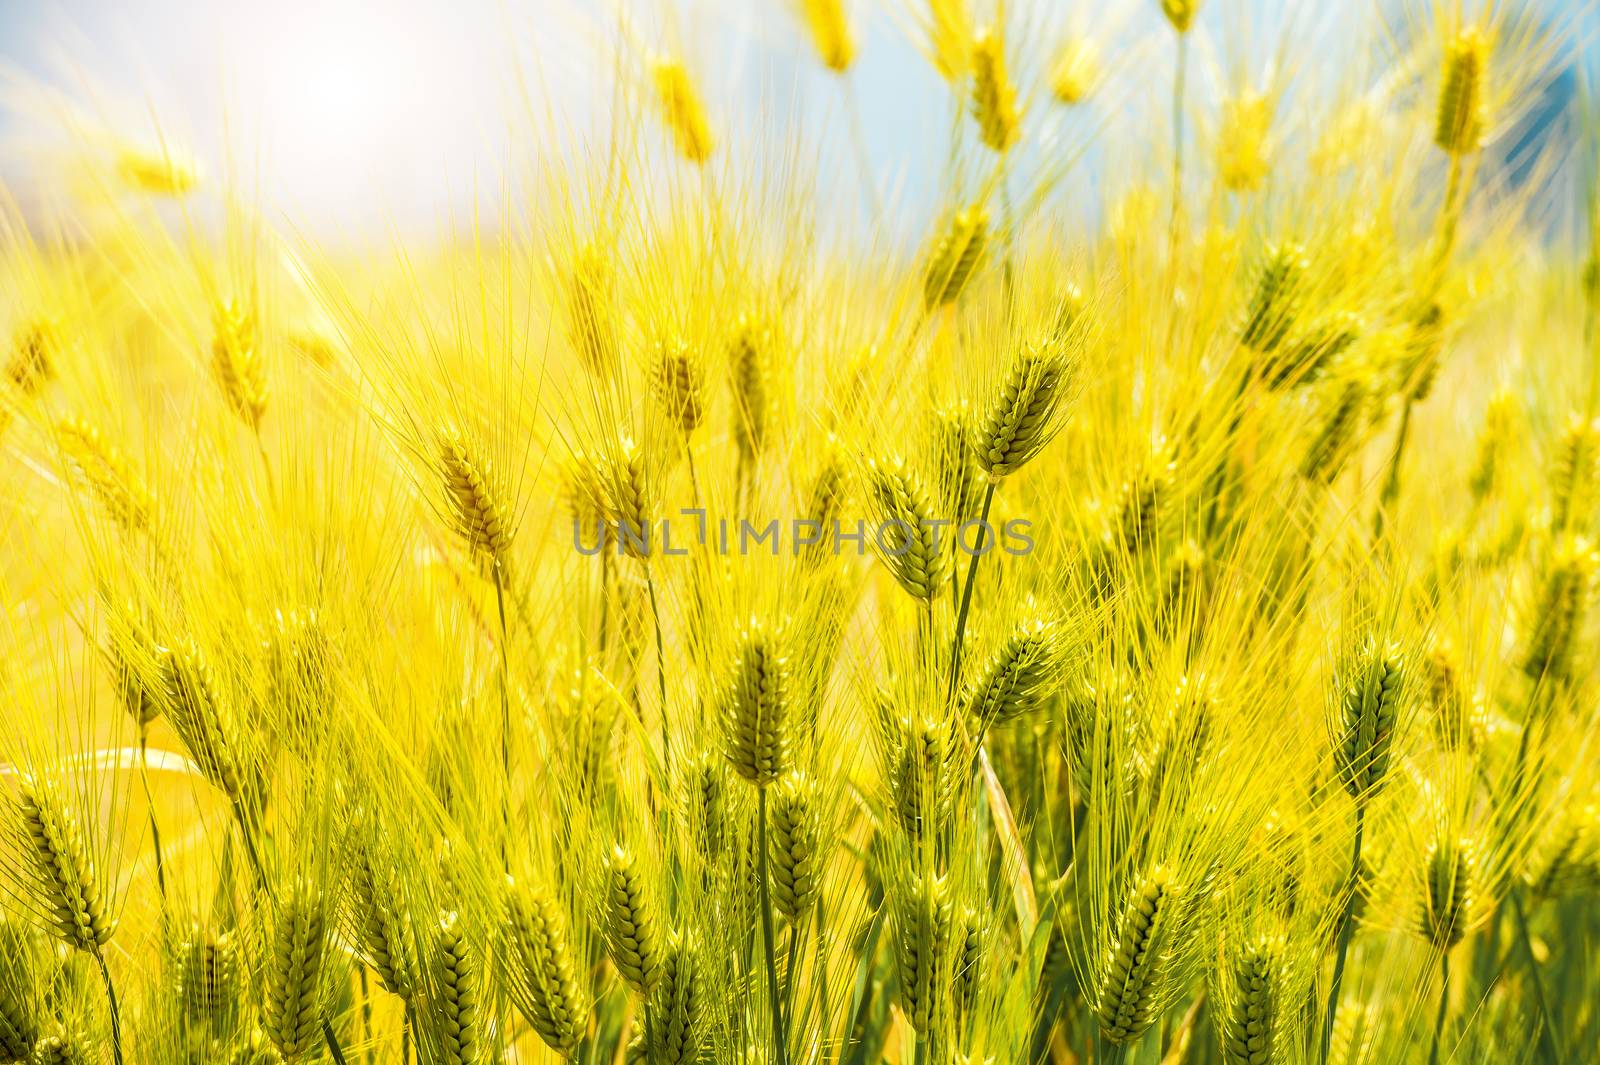 Barley Field by gutarphotoghaphy